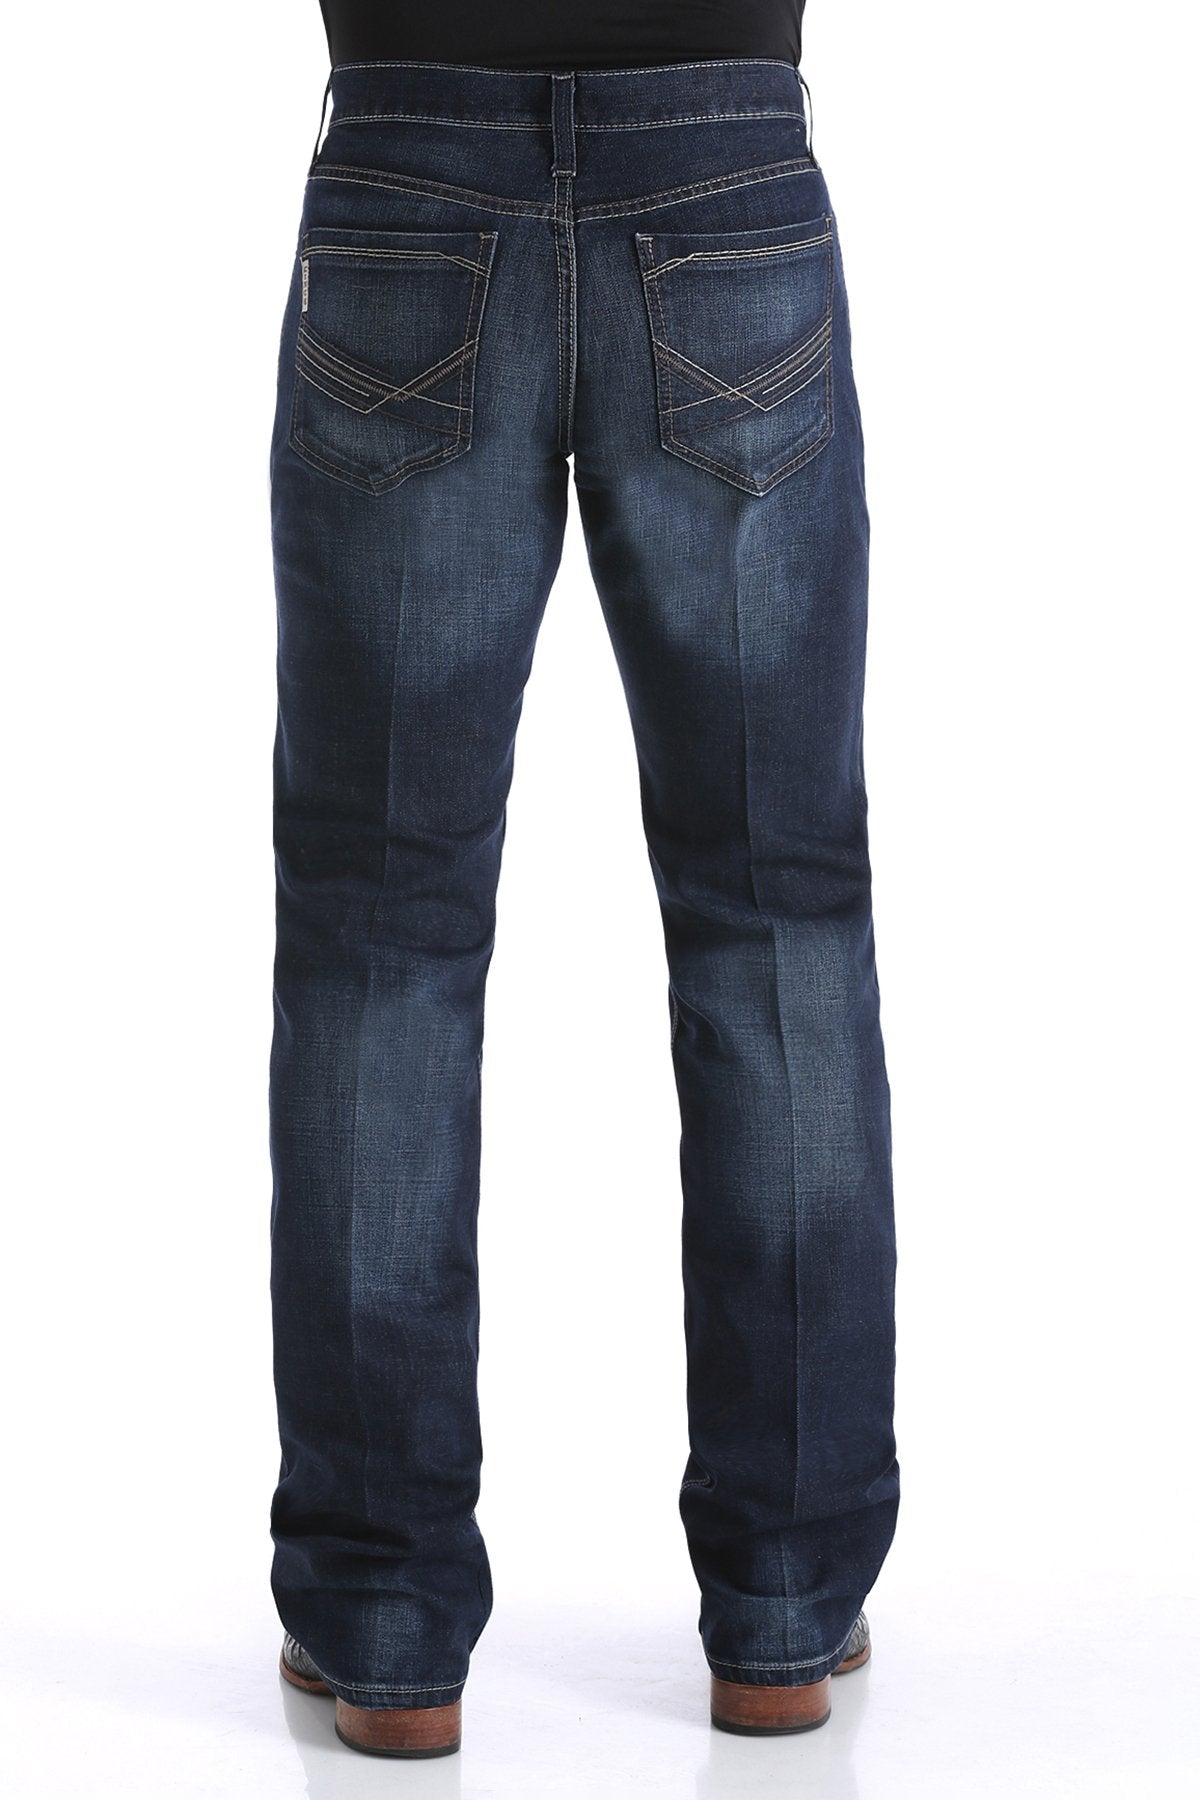 Cinch Men's Slim Fit Ian Jeans-Dark Stonewash